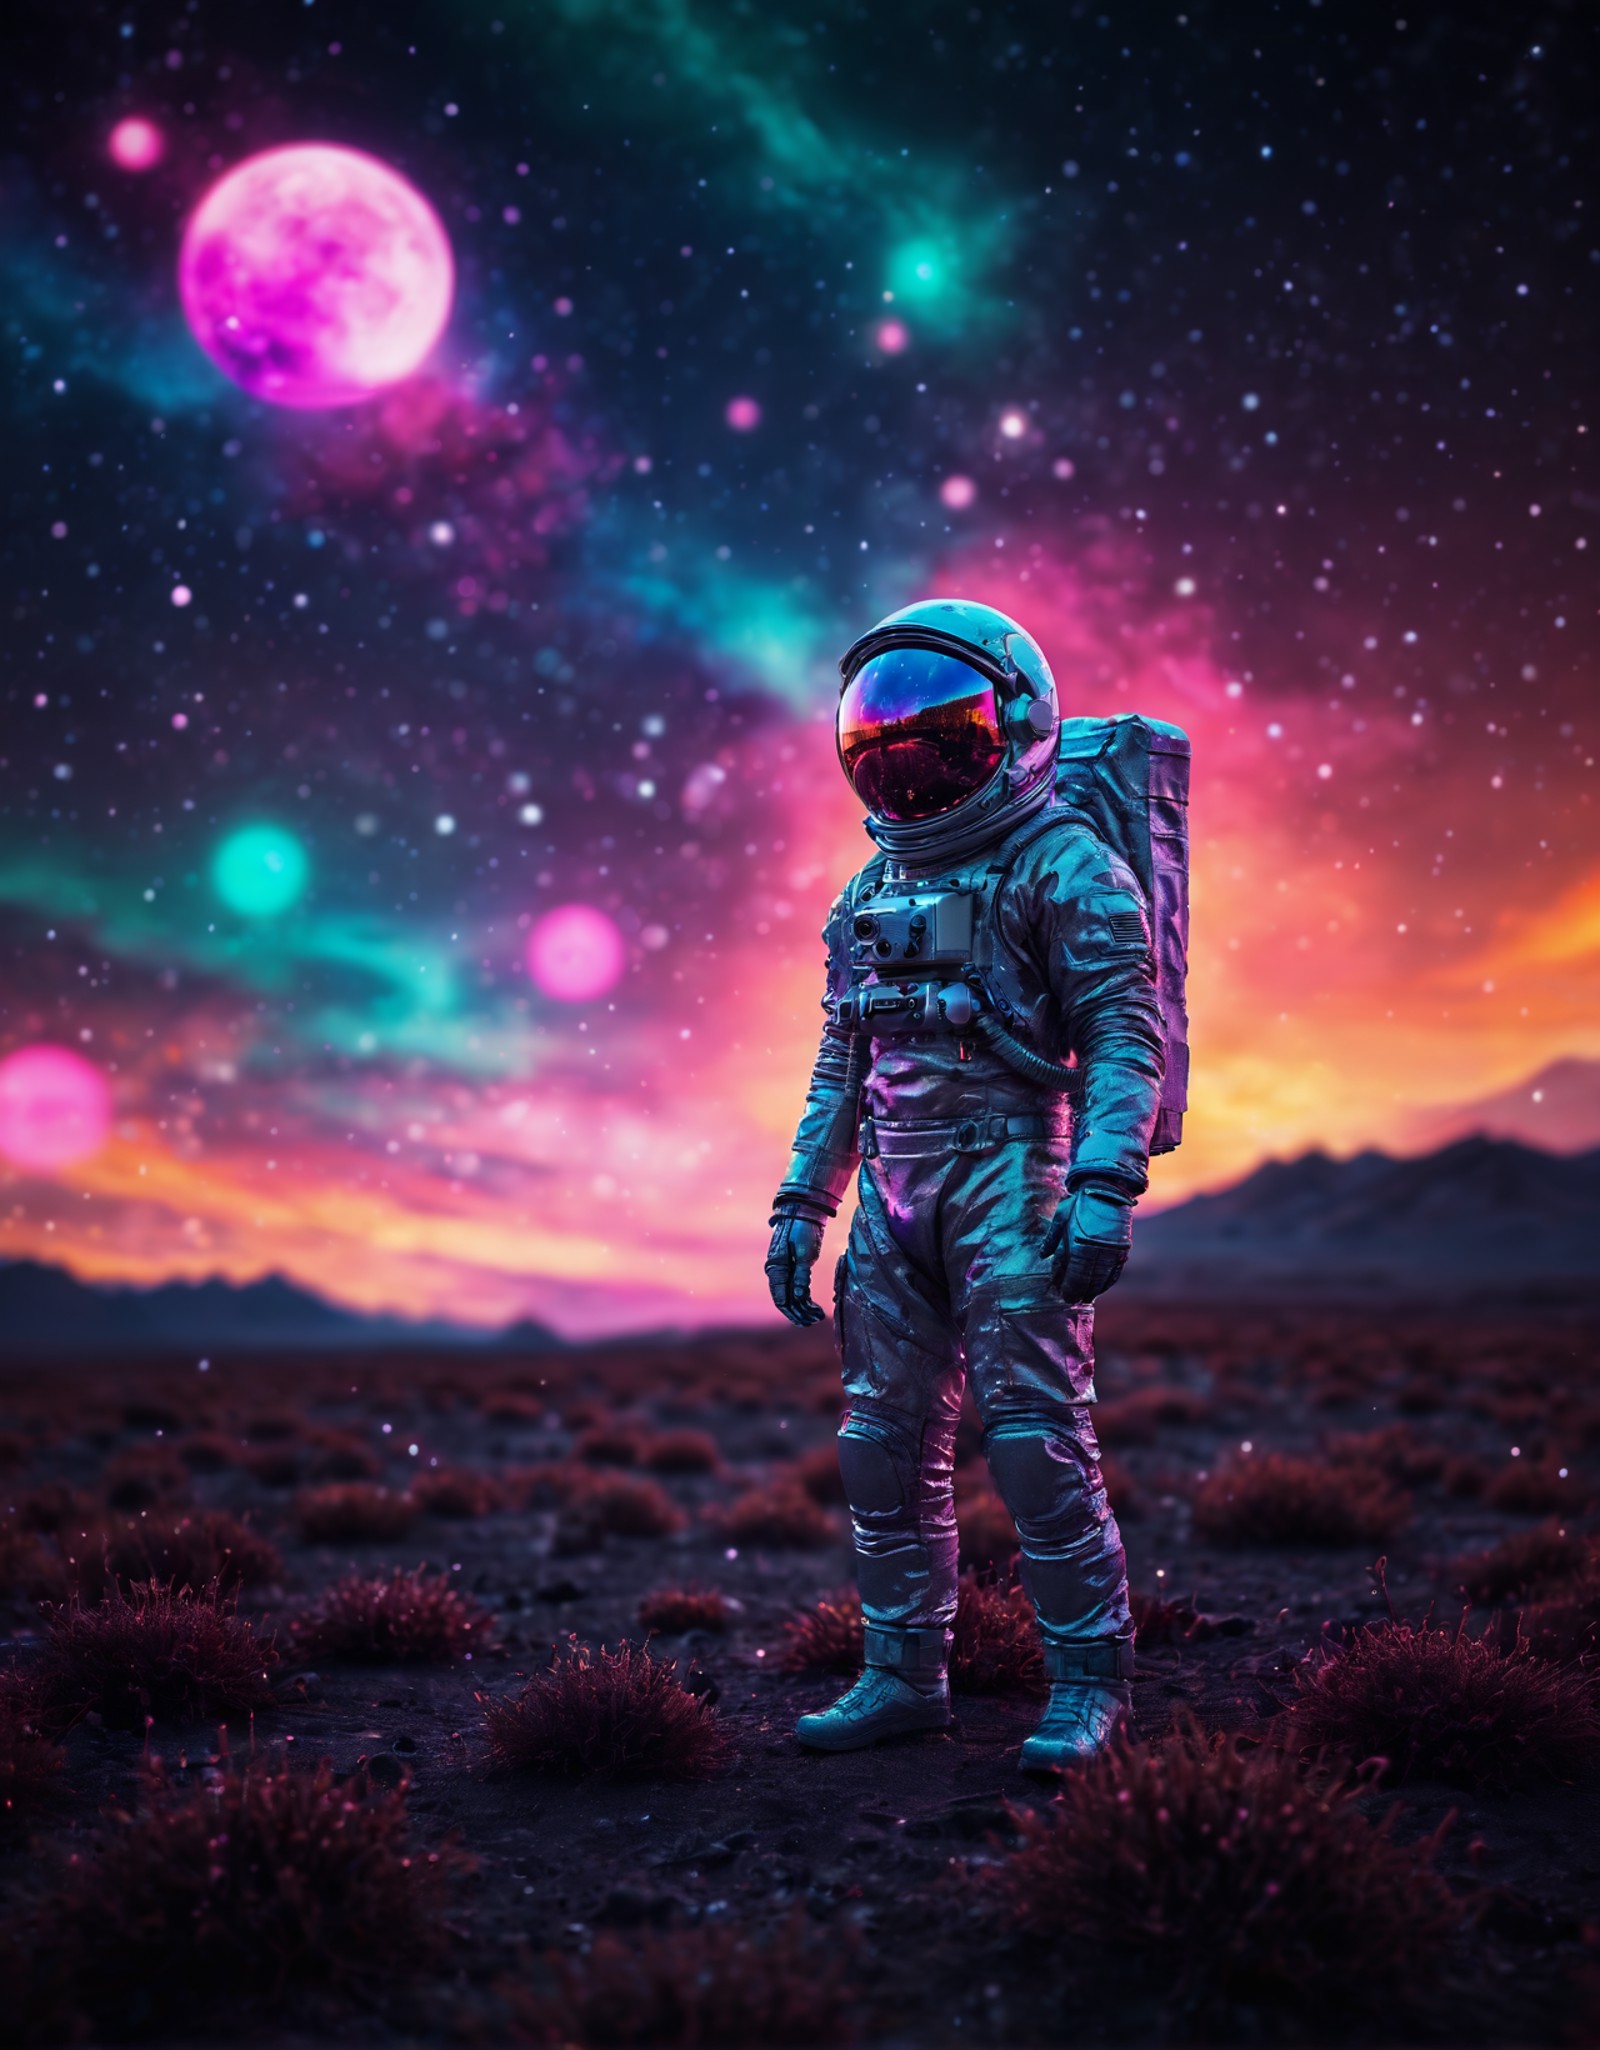 breathtaking shallow depth of field, bokeh, retro futuristic astronaut floating in a beautiful colorful starfield, ultra w...